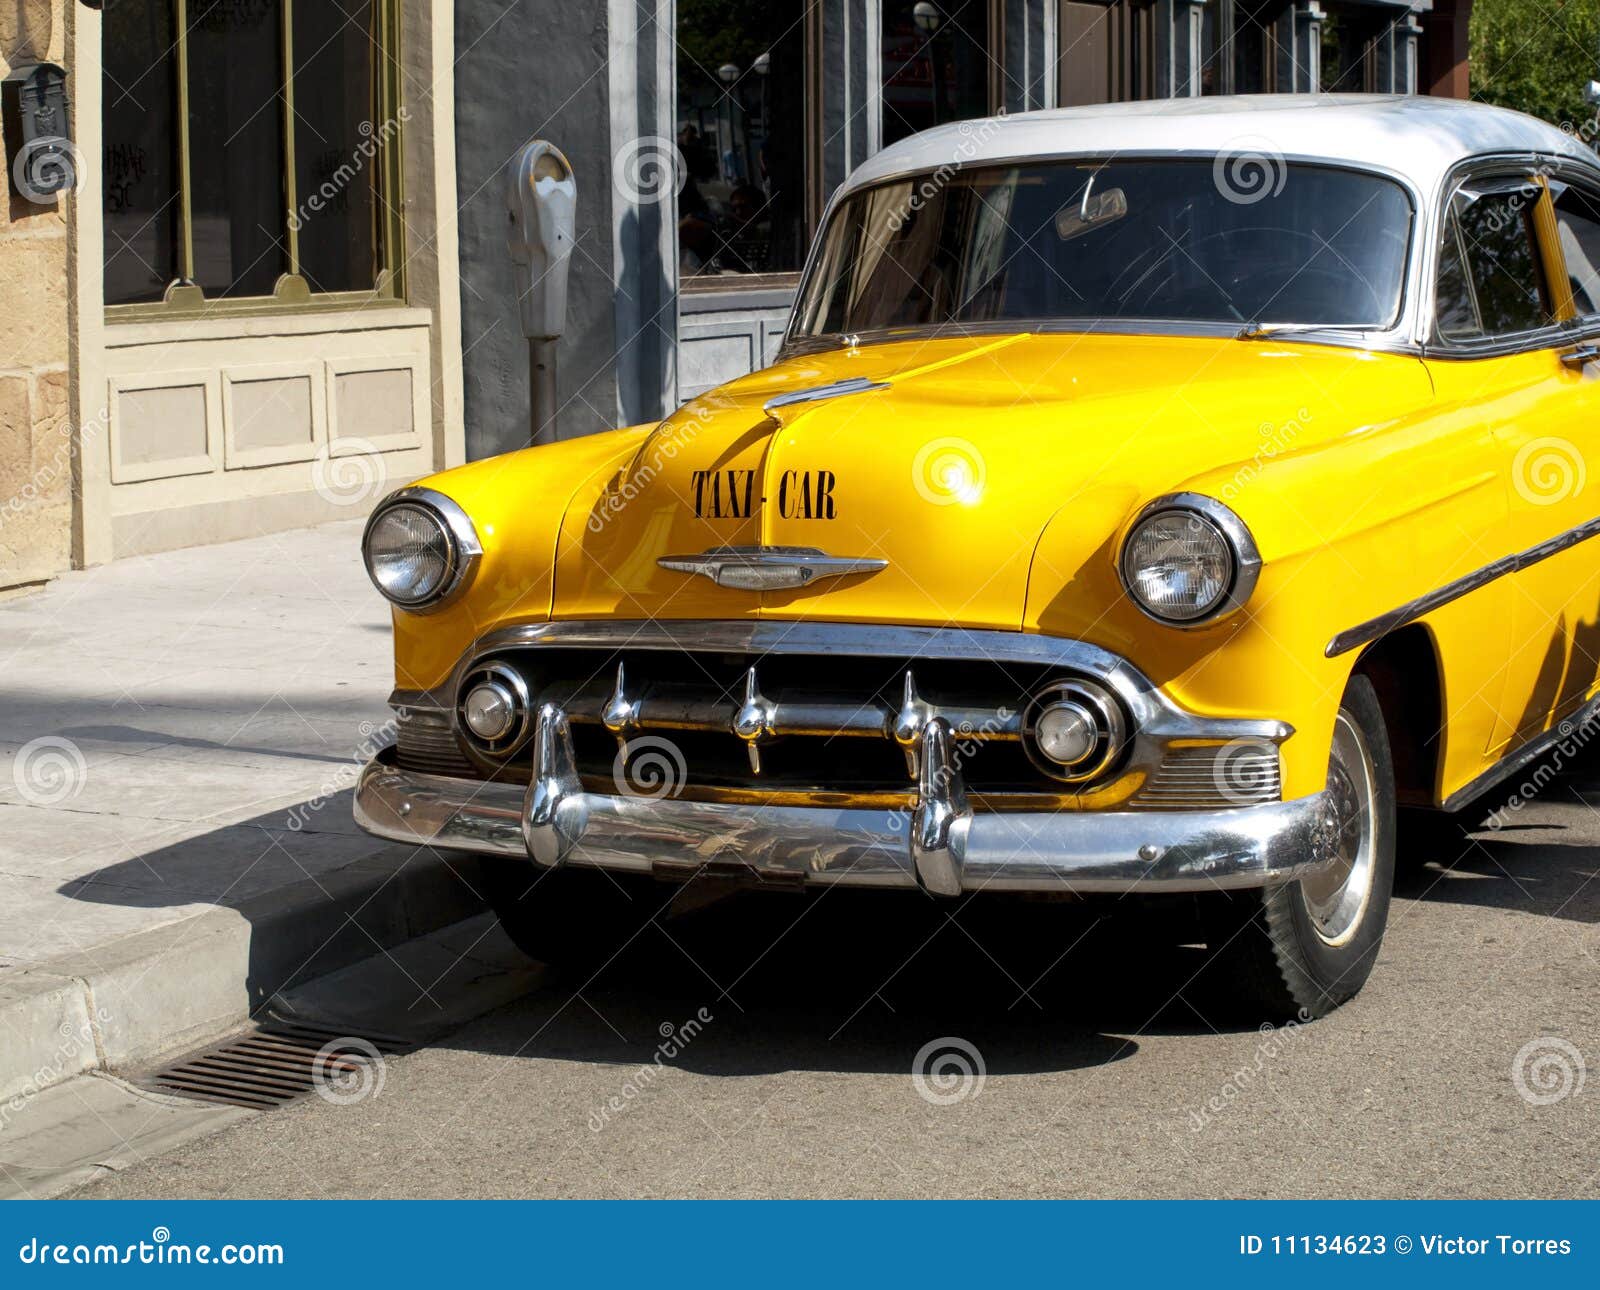 Vintage Cab 19